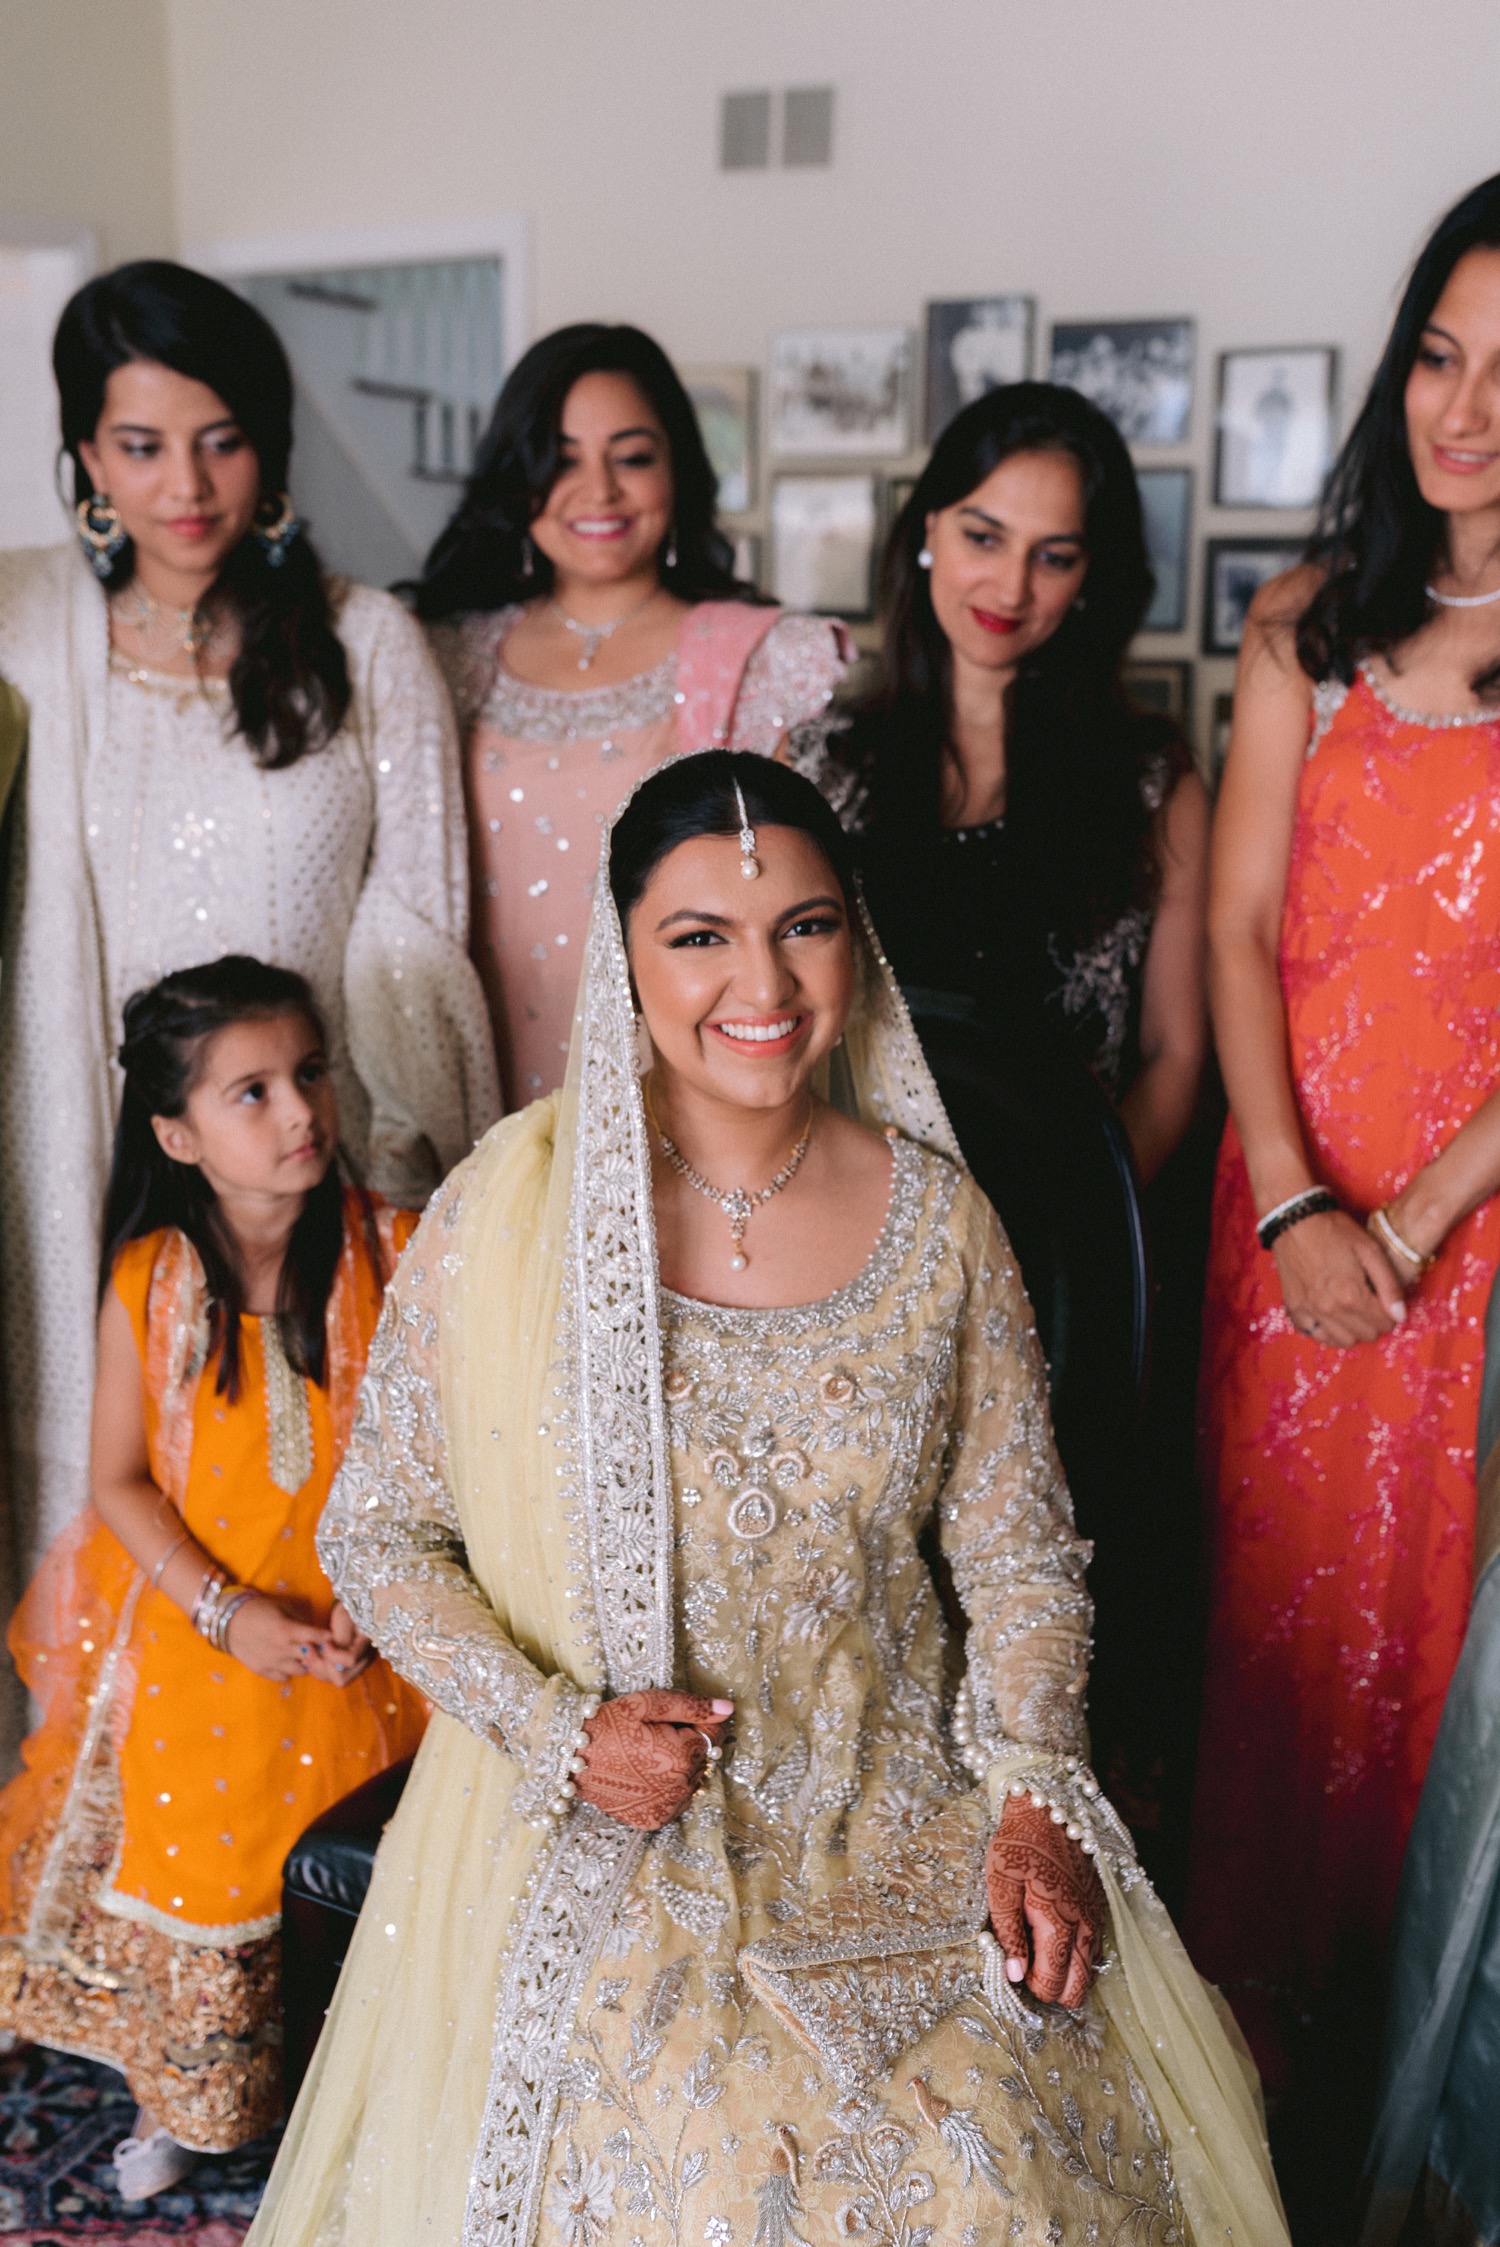 Image may contain: one or more people and closeup | Bridal dresses, Pakistani  bridal dresses, Bridal dress design